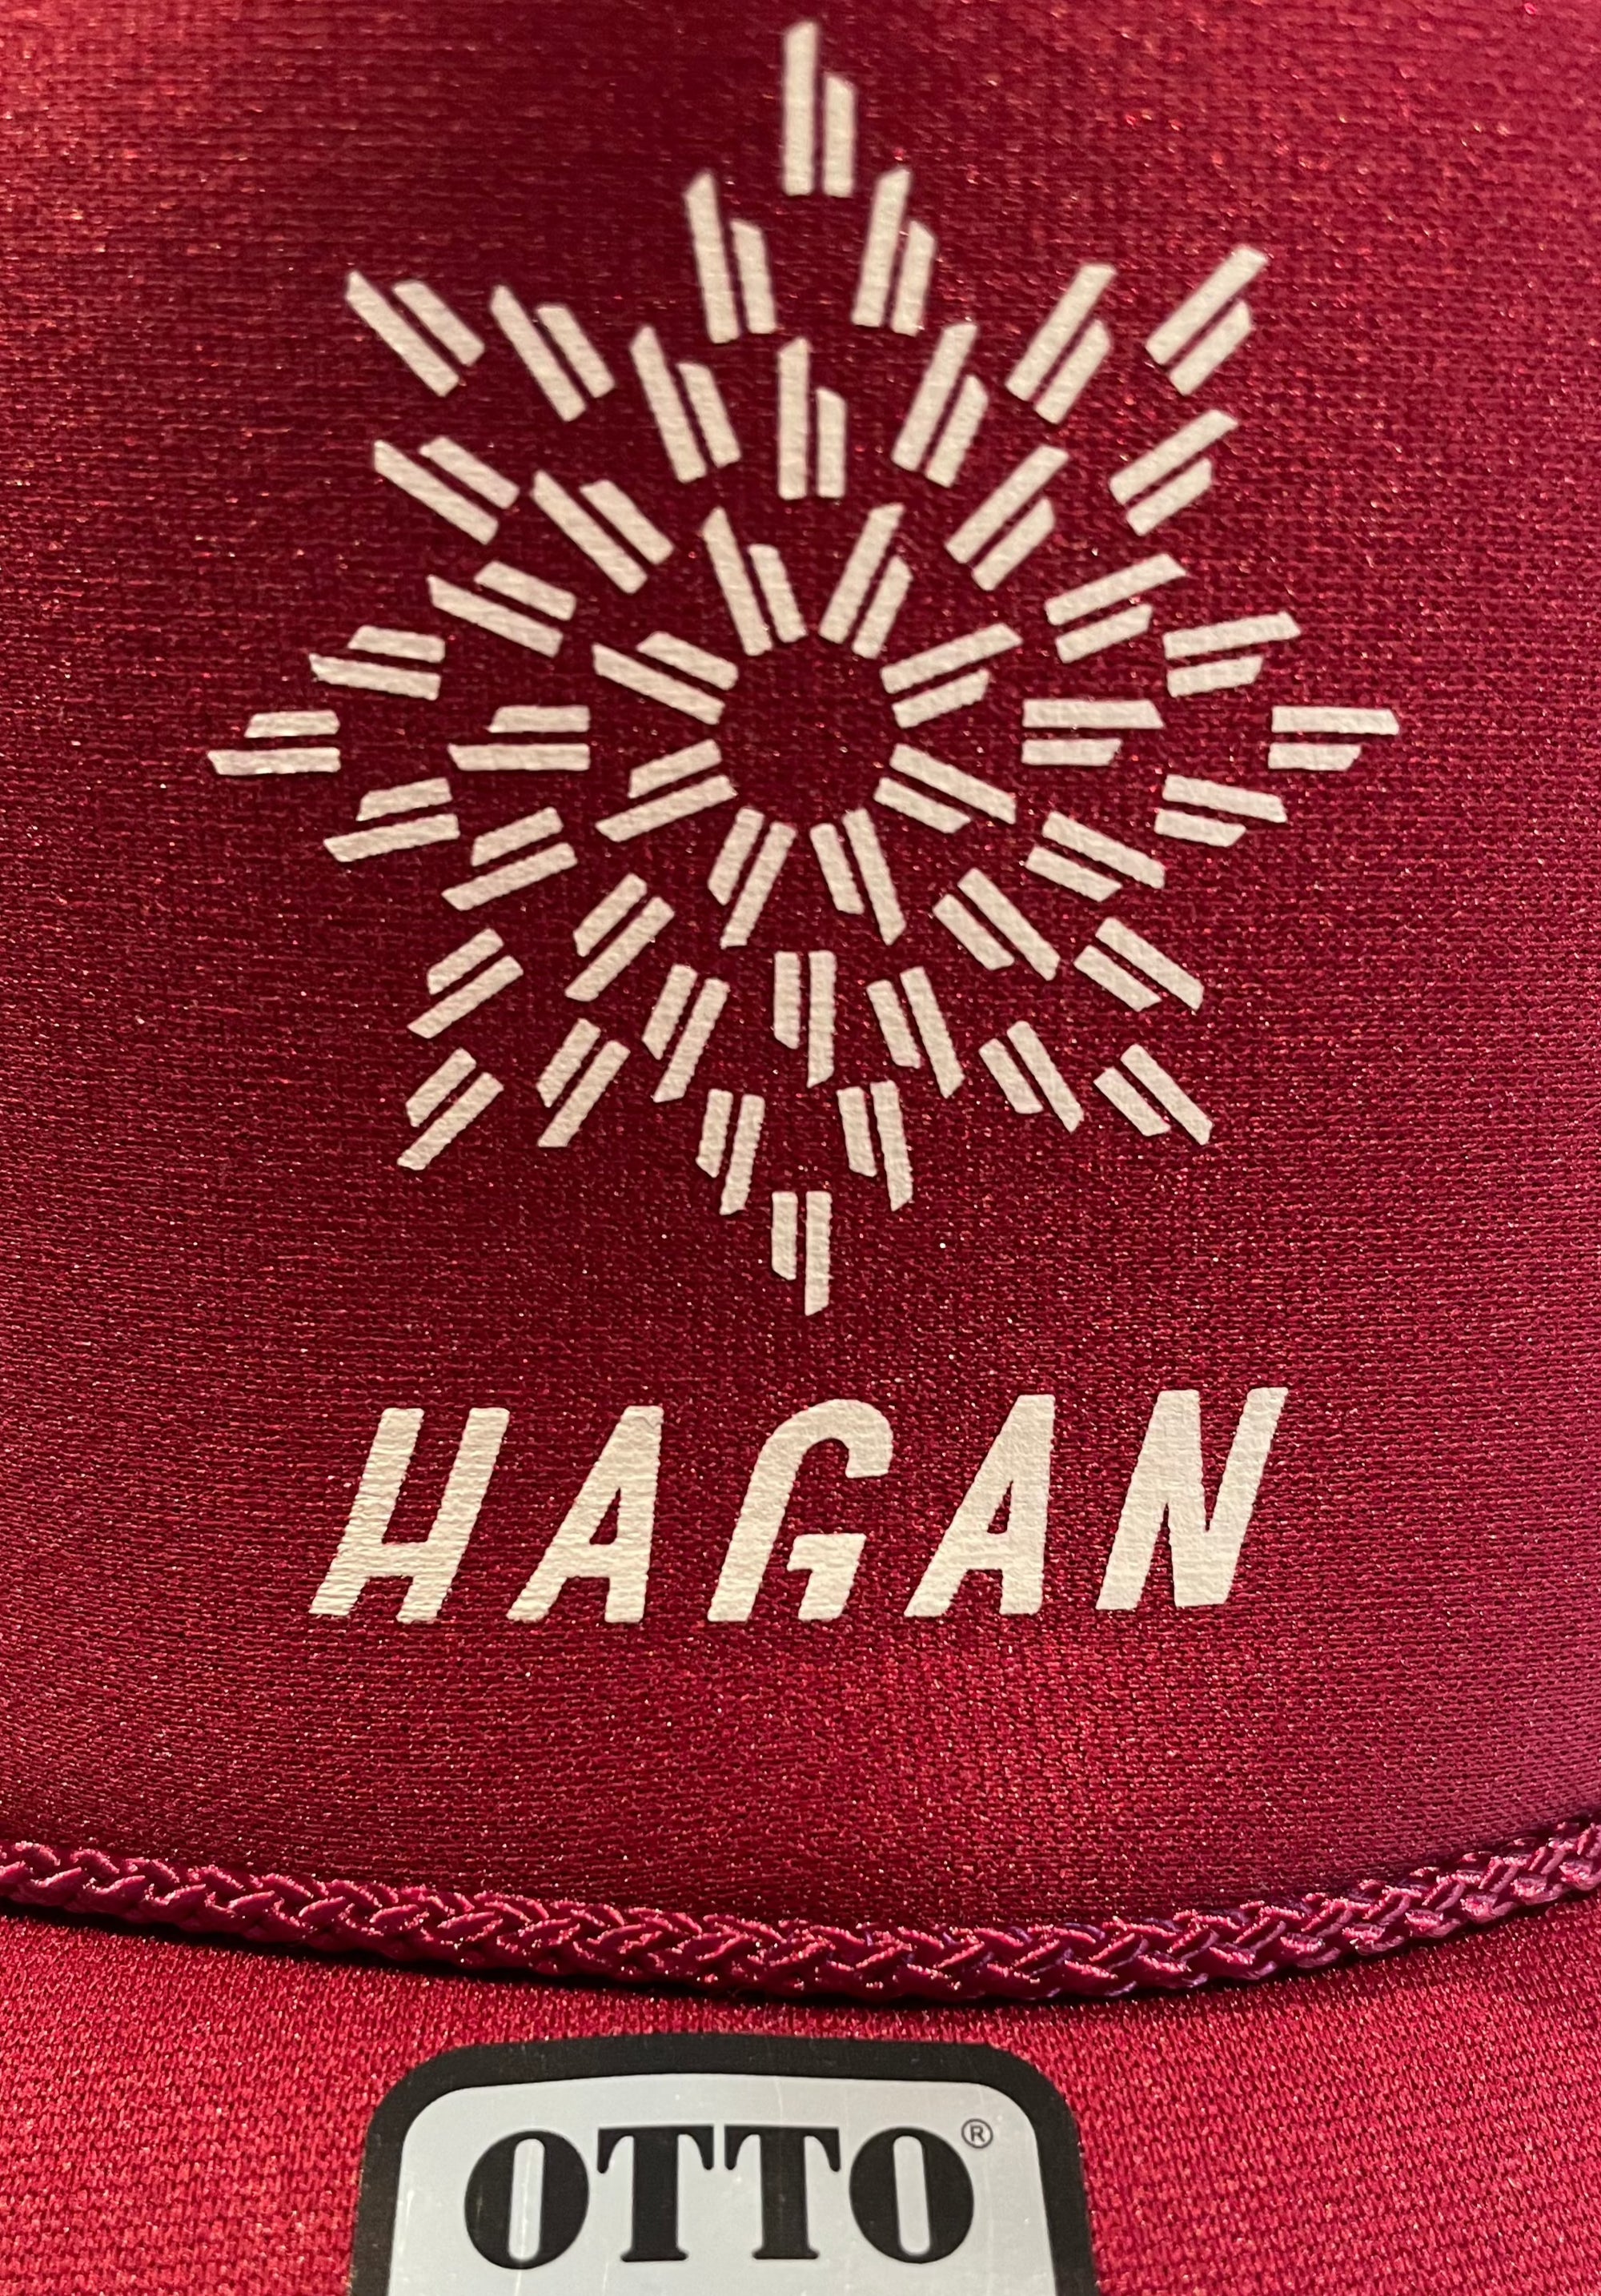 Hagan Logo Snowburst design by local big mountain skier and artist, Ben Hogan, Golden, Colorado